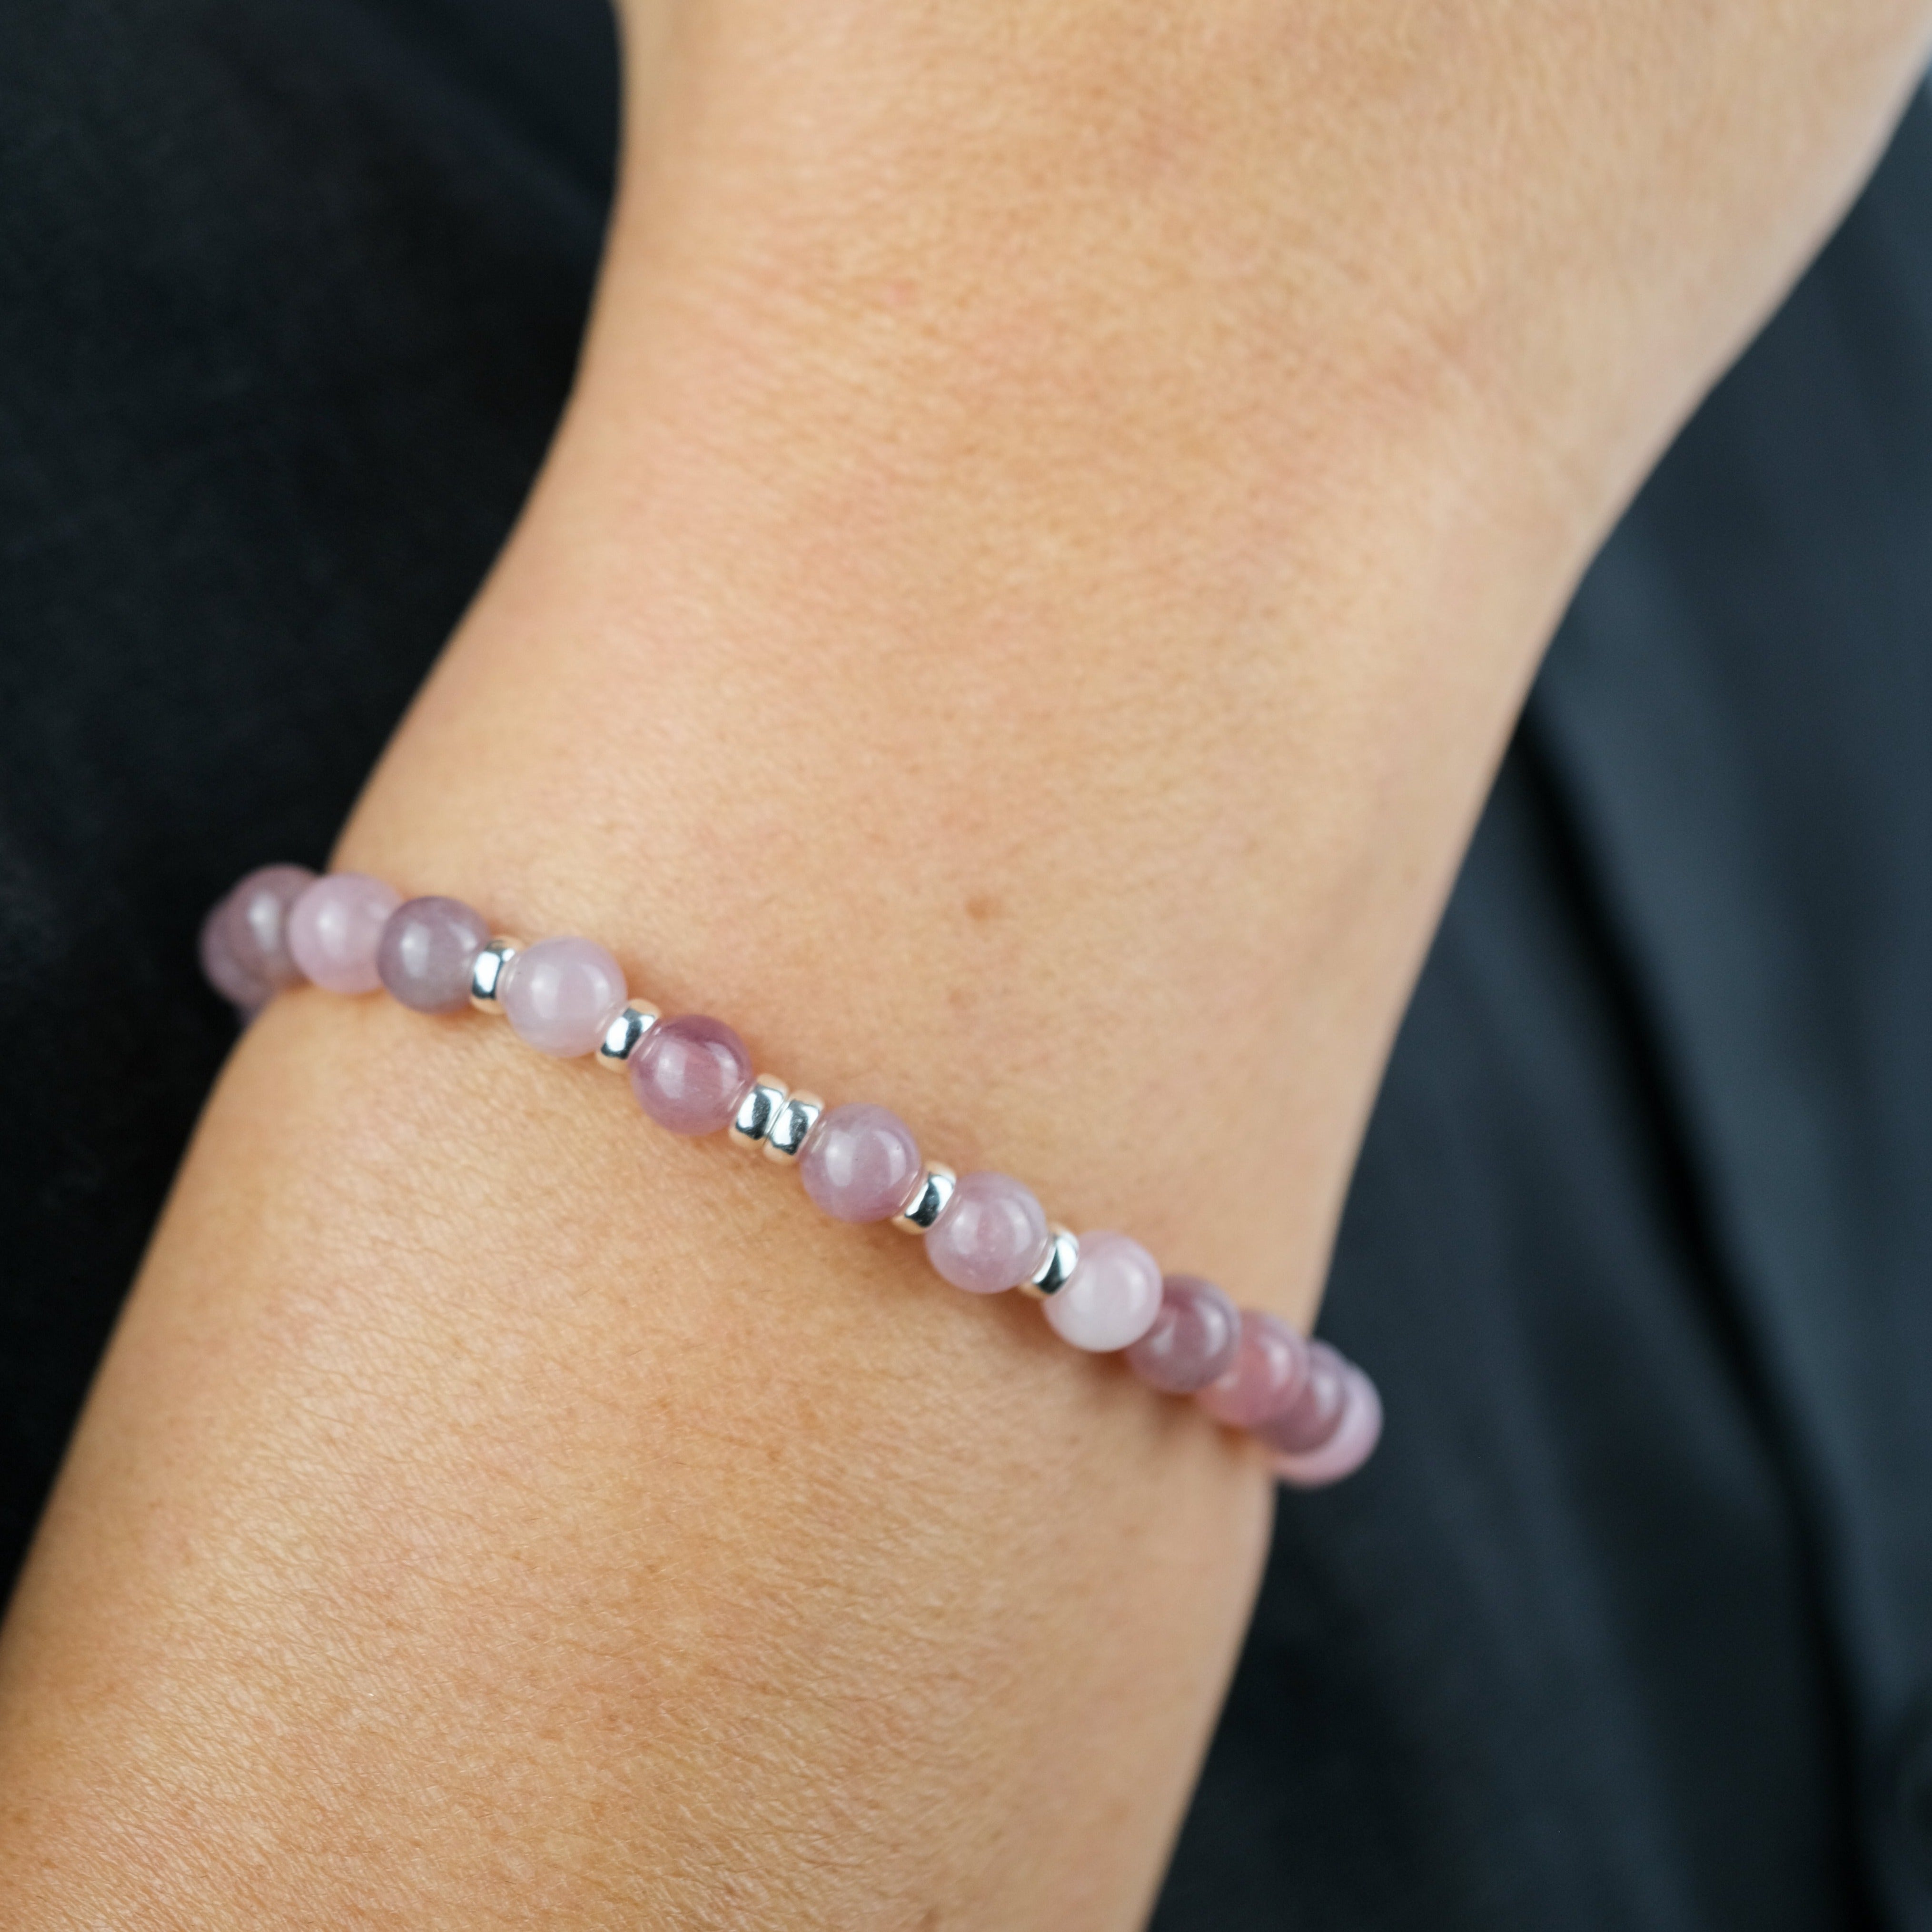 A model wearing a lavender rose quartz 6mm gemstone bracelet with 925 sterling silver accessories